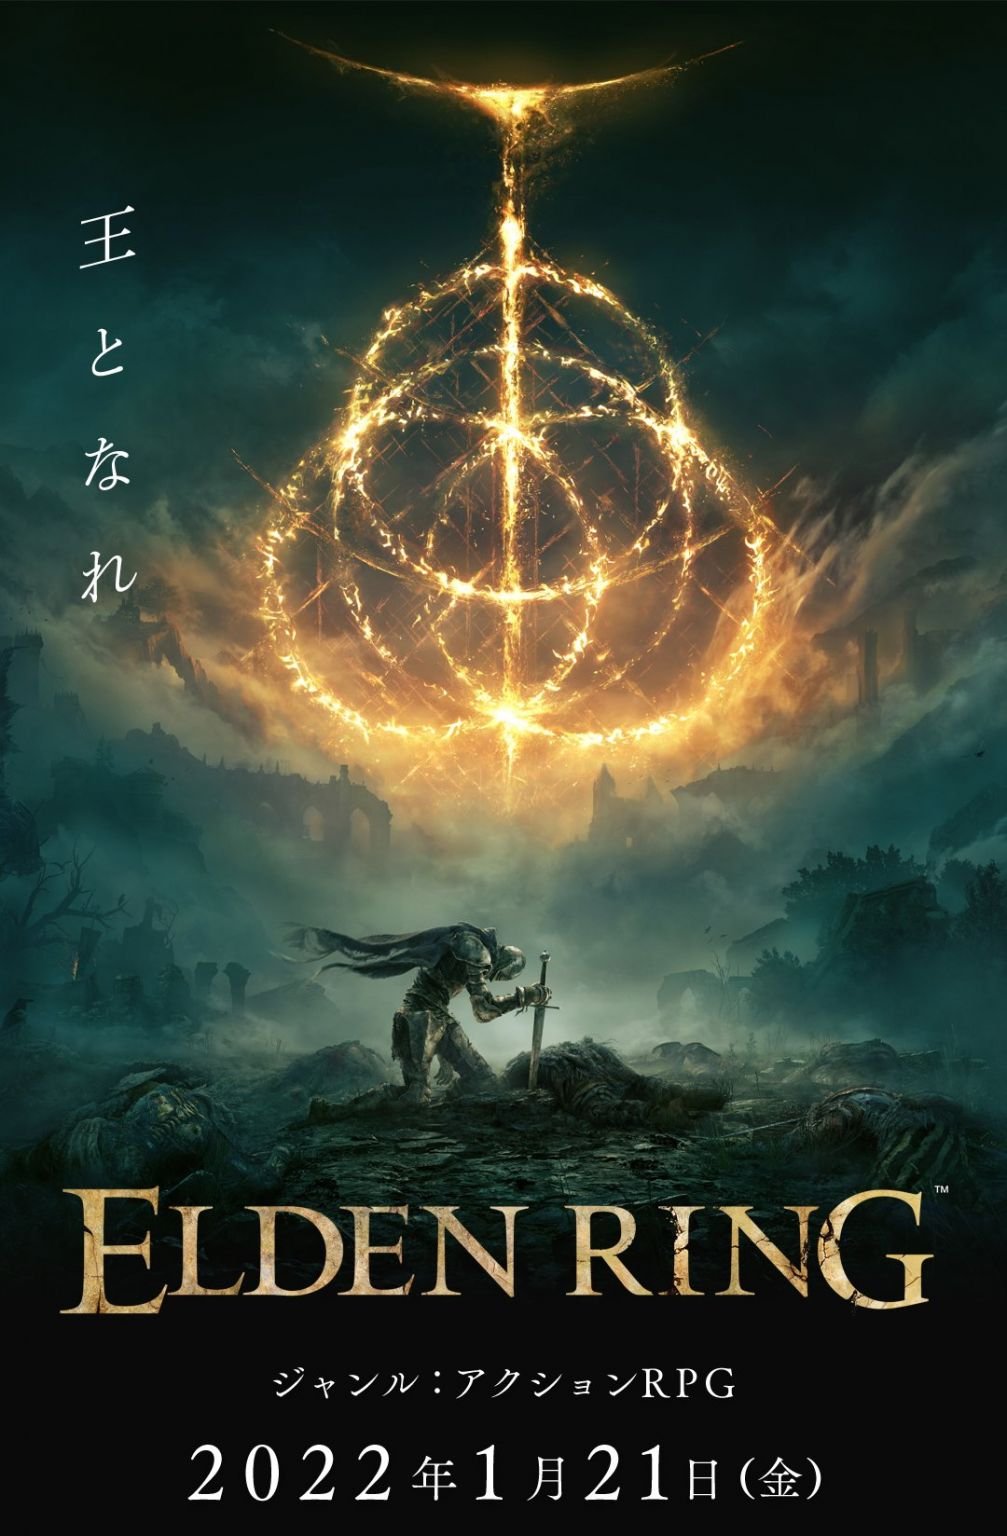 the elden ring